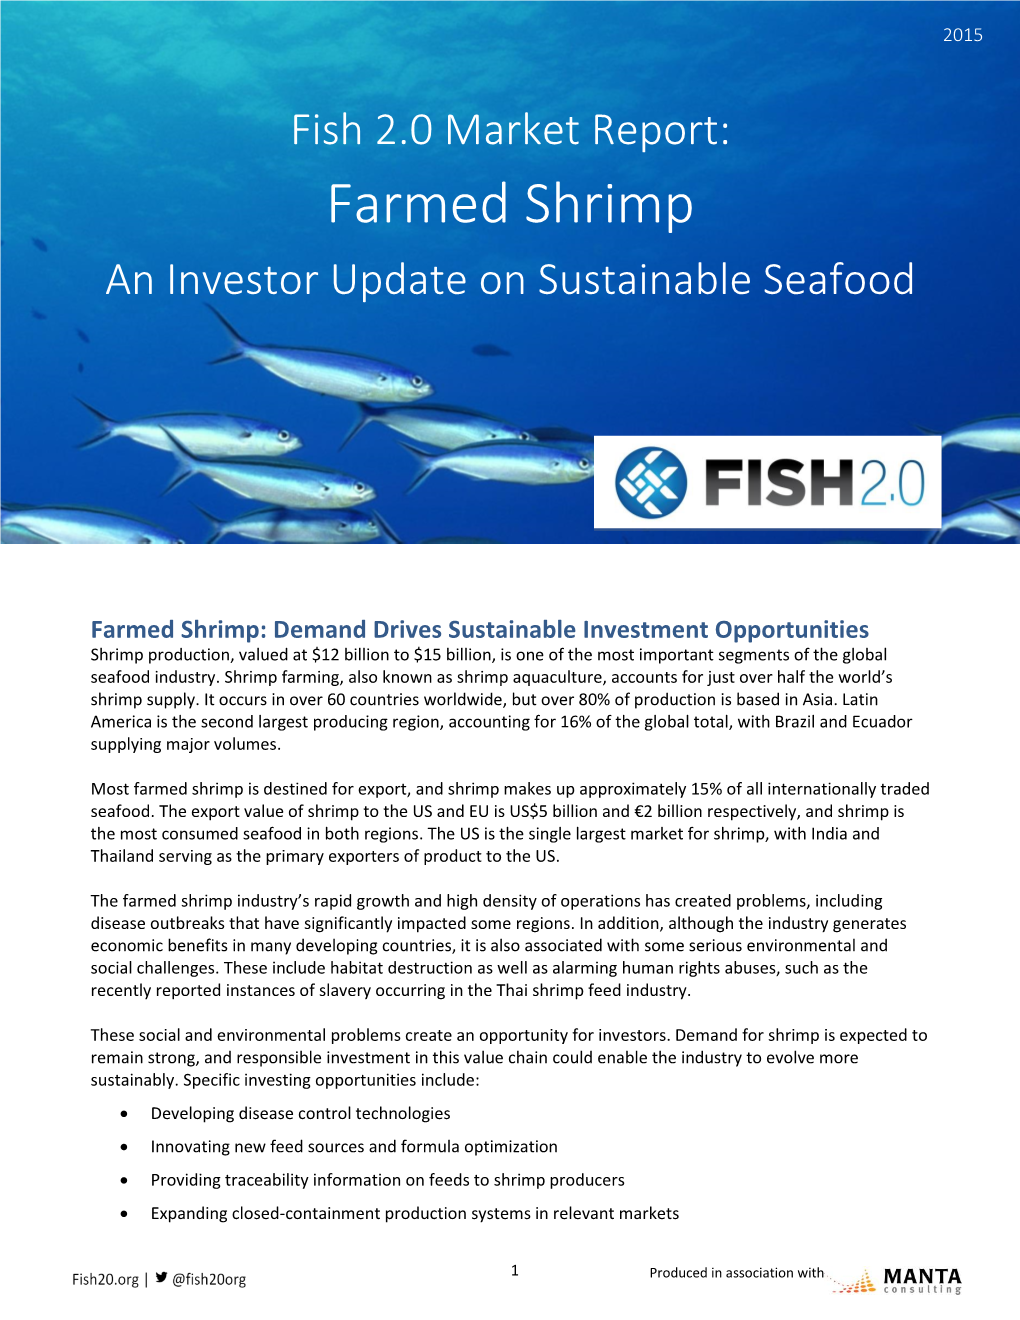 Fish 2.0 Market Report: Farmed Shrimp 2015